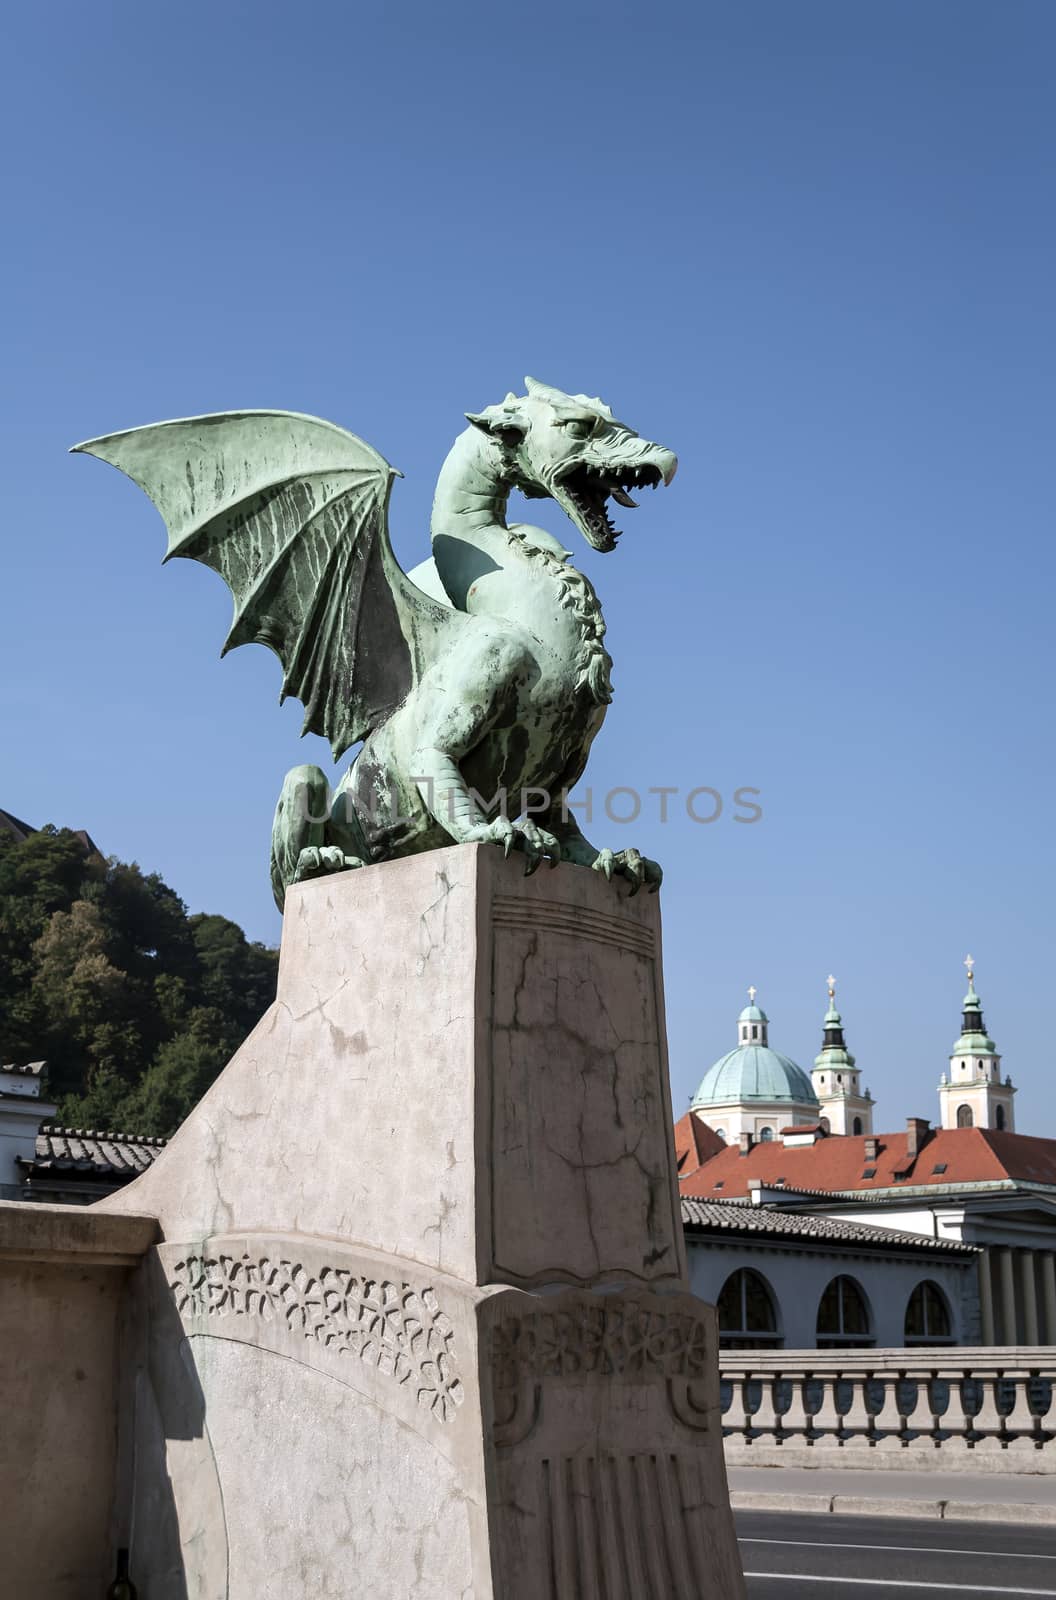 Dragon Bridge with St Nicholas Cathedral in the background, in Ljubljana, Slovenia.